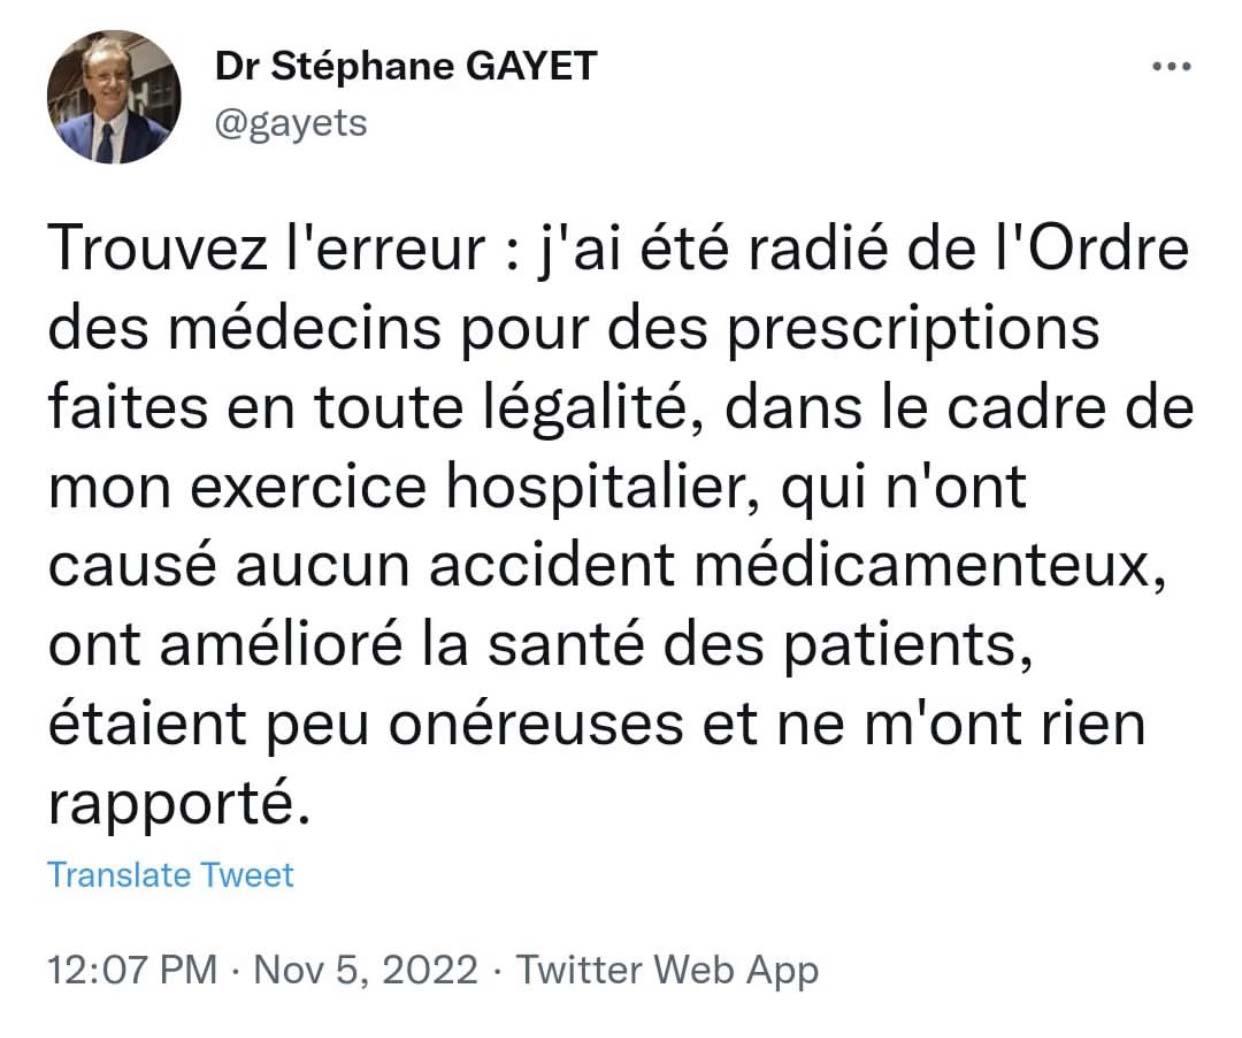 Dr. Stéphane Gayet, licencié